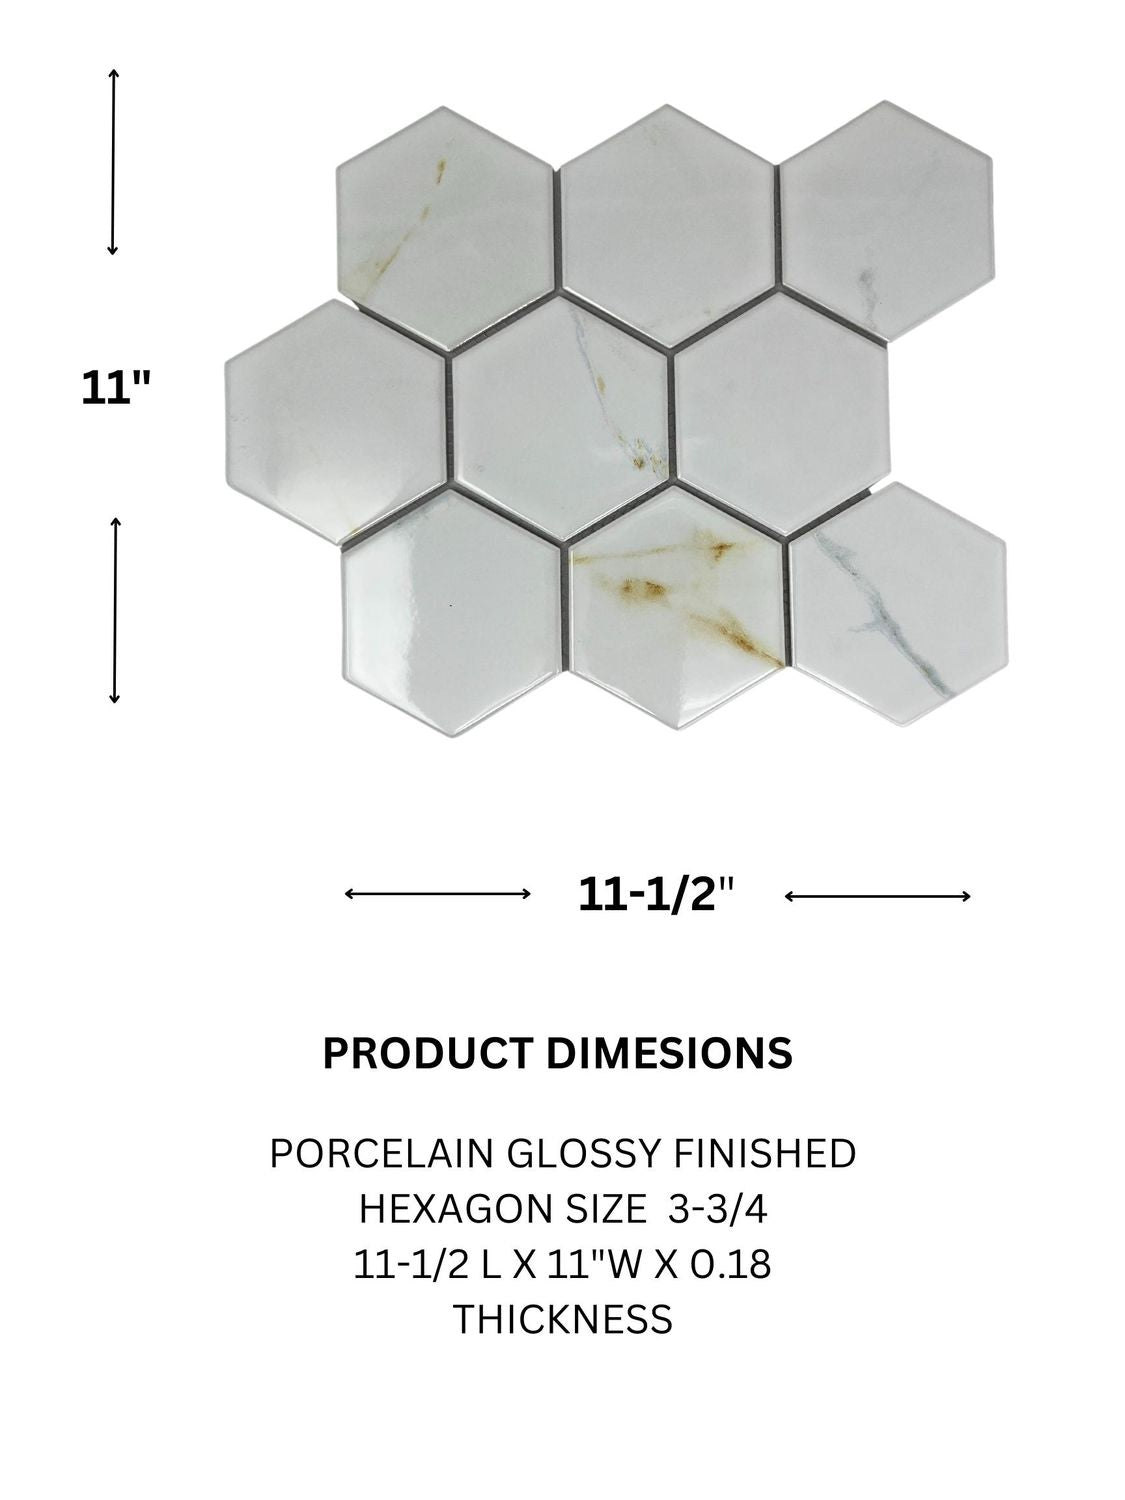 Tenedos Milano 4" Calacatta Gold Look Hexagon Porcelain Floor & Wall Tile for Kitchen Backsplash, Bathroom Shower, Accent Wall